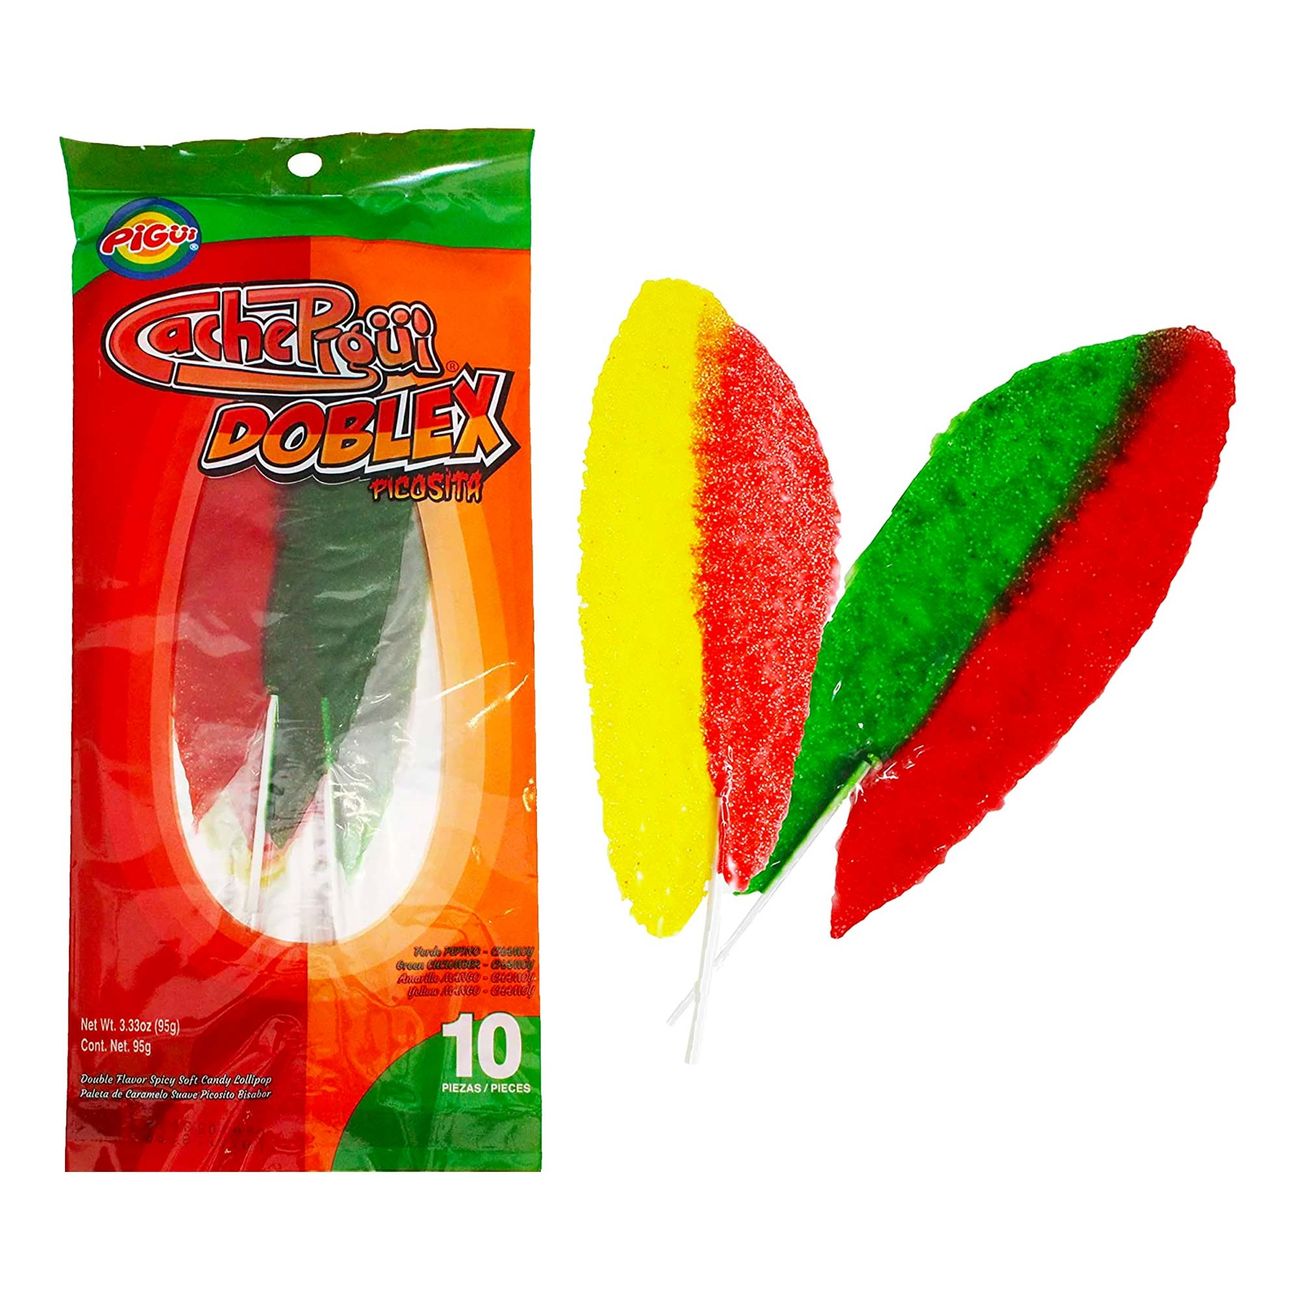 cachetadas-spicy-doblex-slaps-96168-2